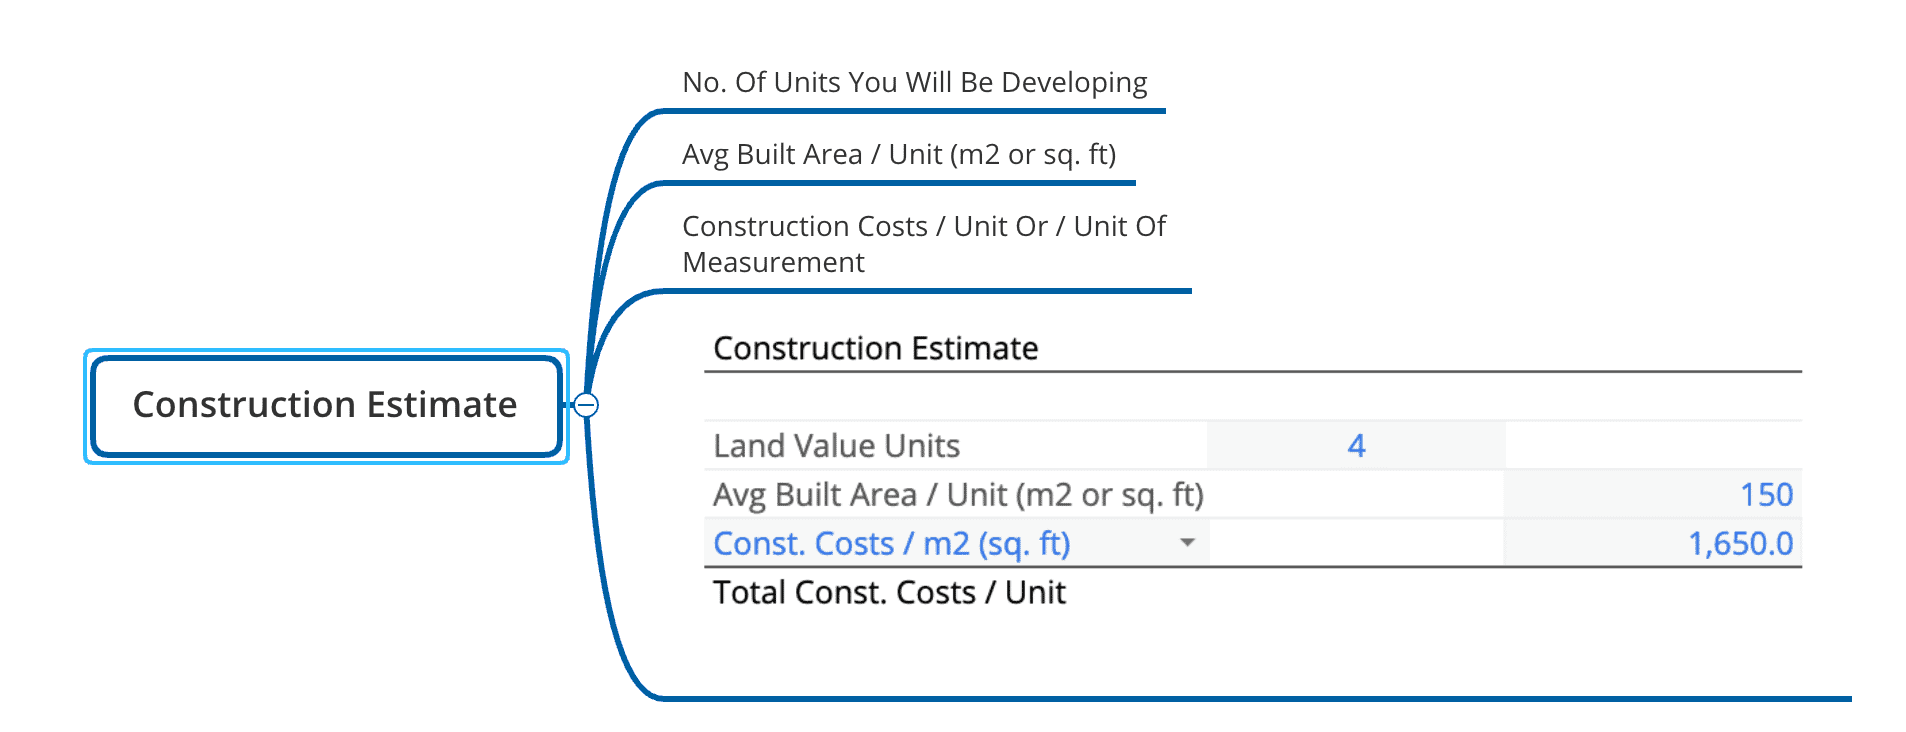 Preliminary Development Feasibility Assessment -Construction Estimate